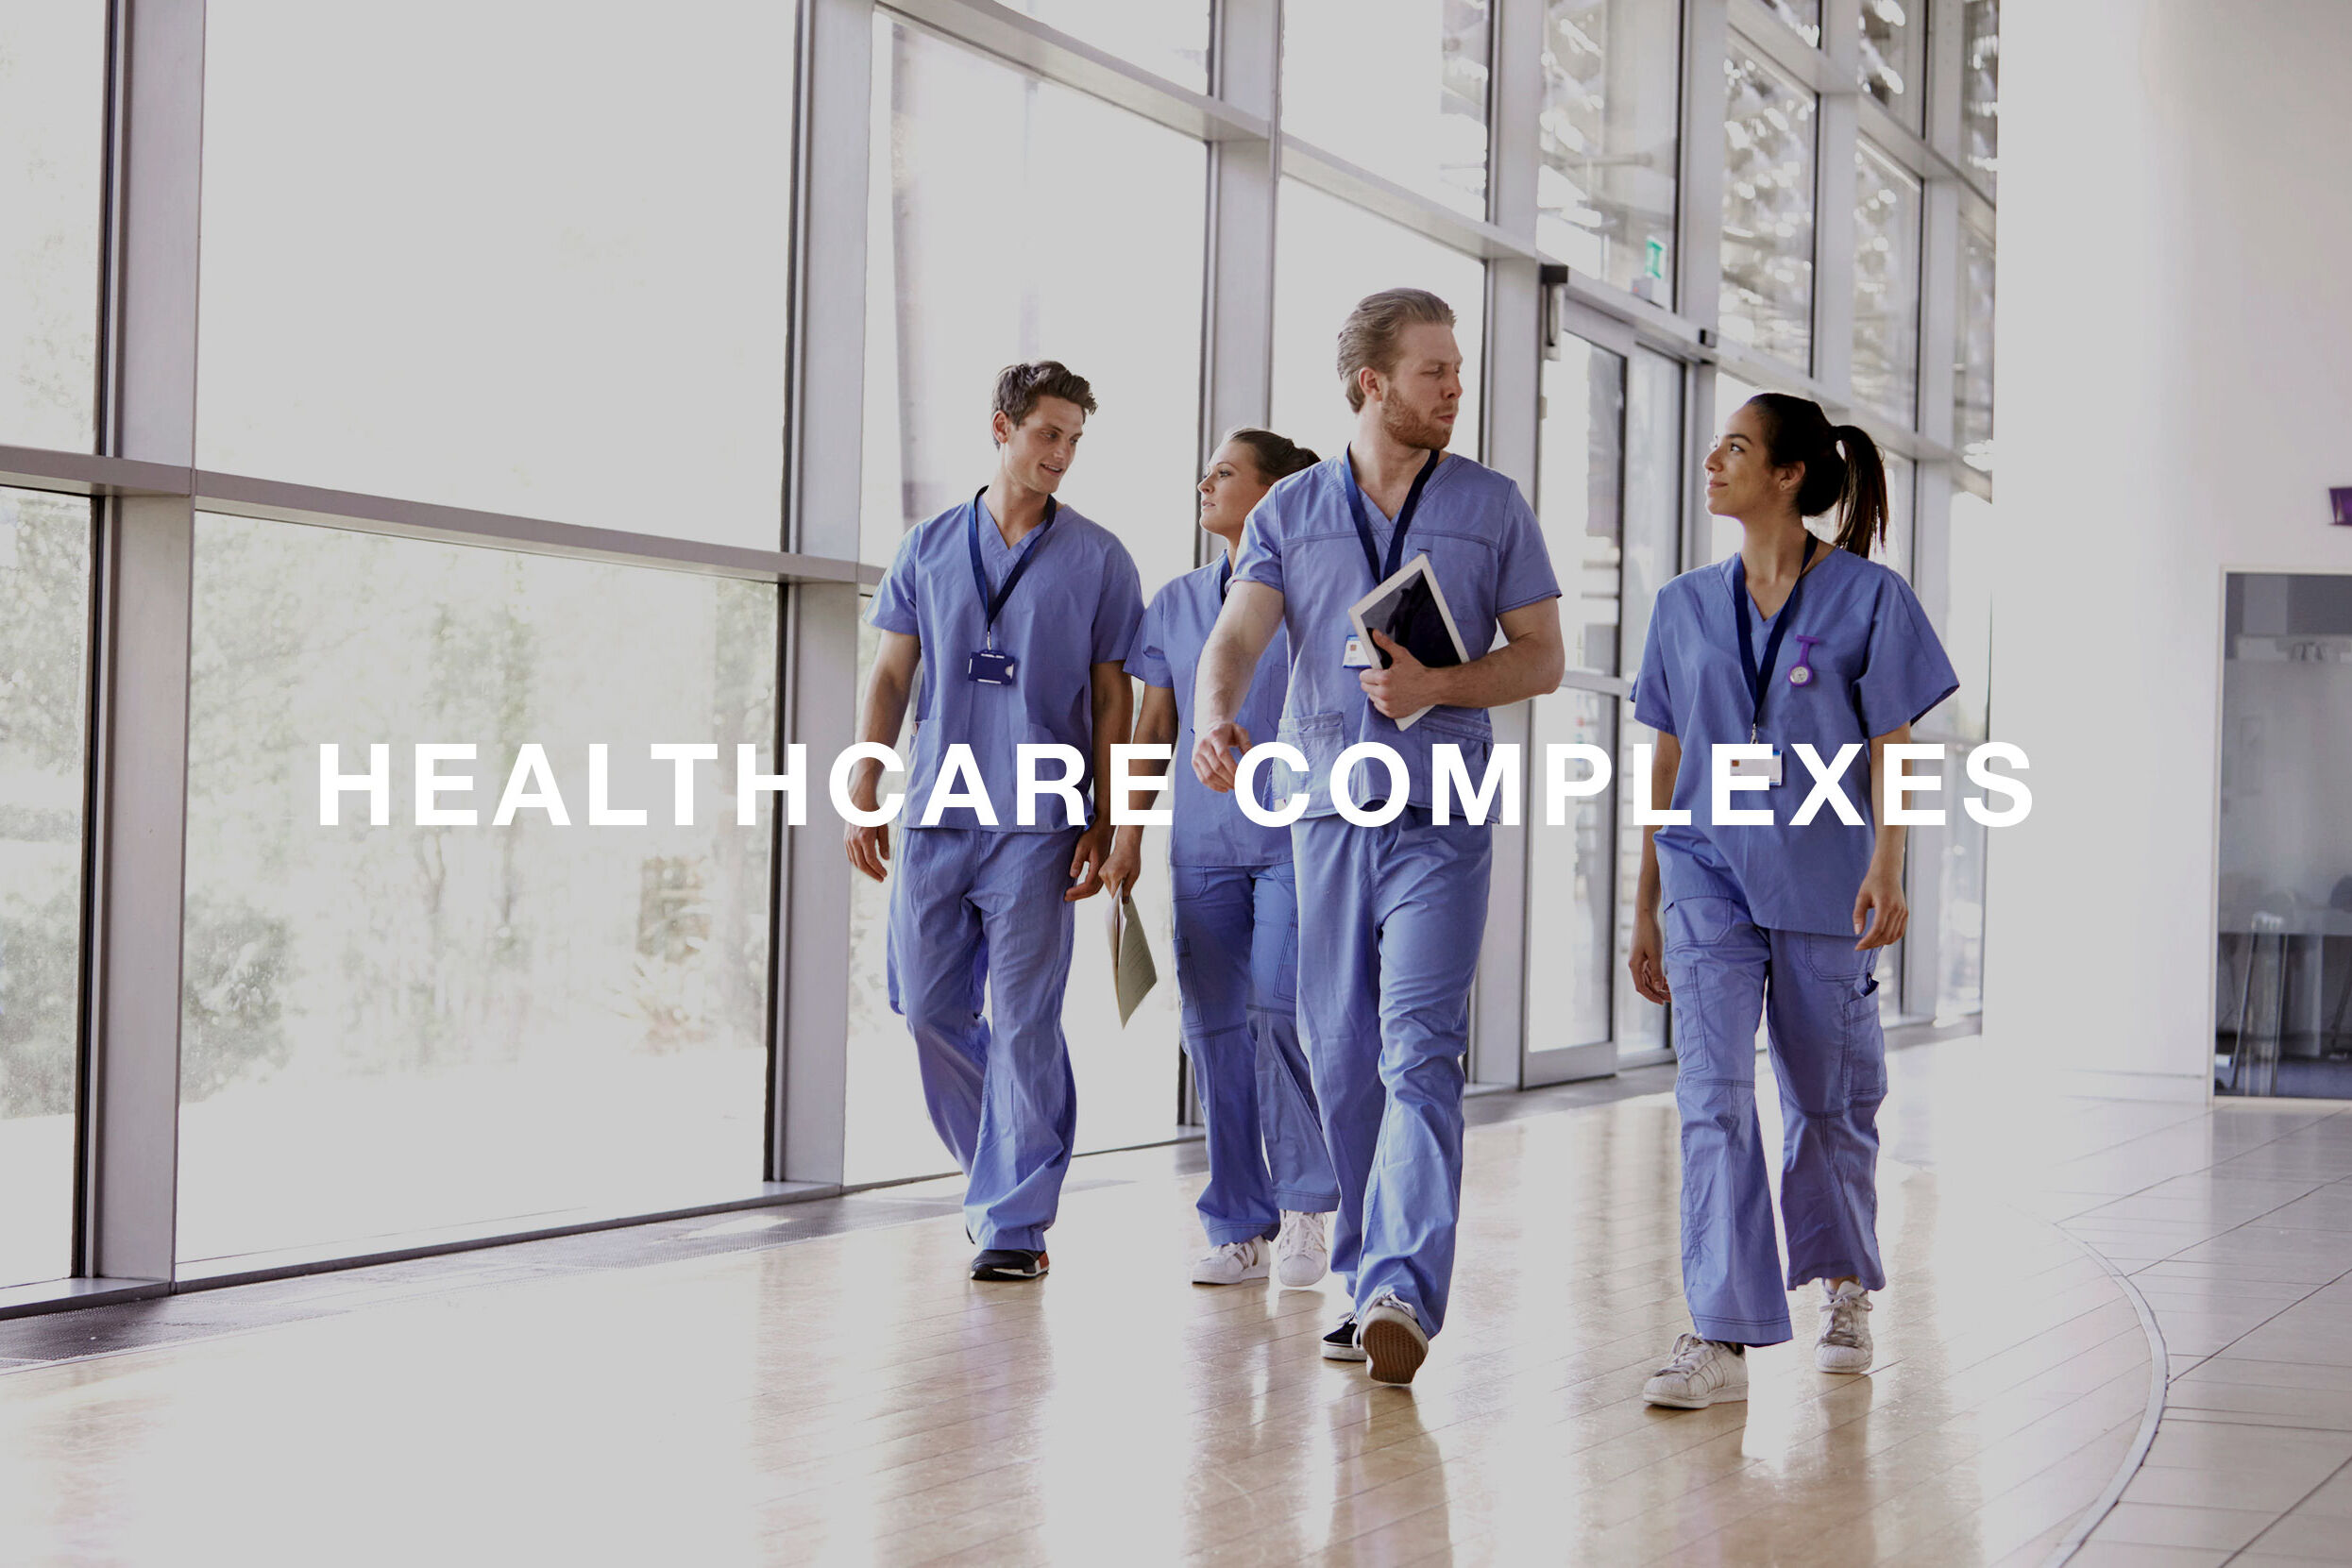 Healthcare Complexes